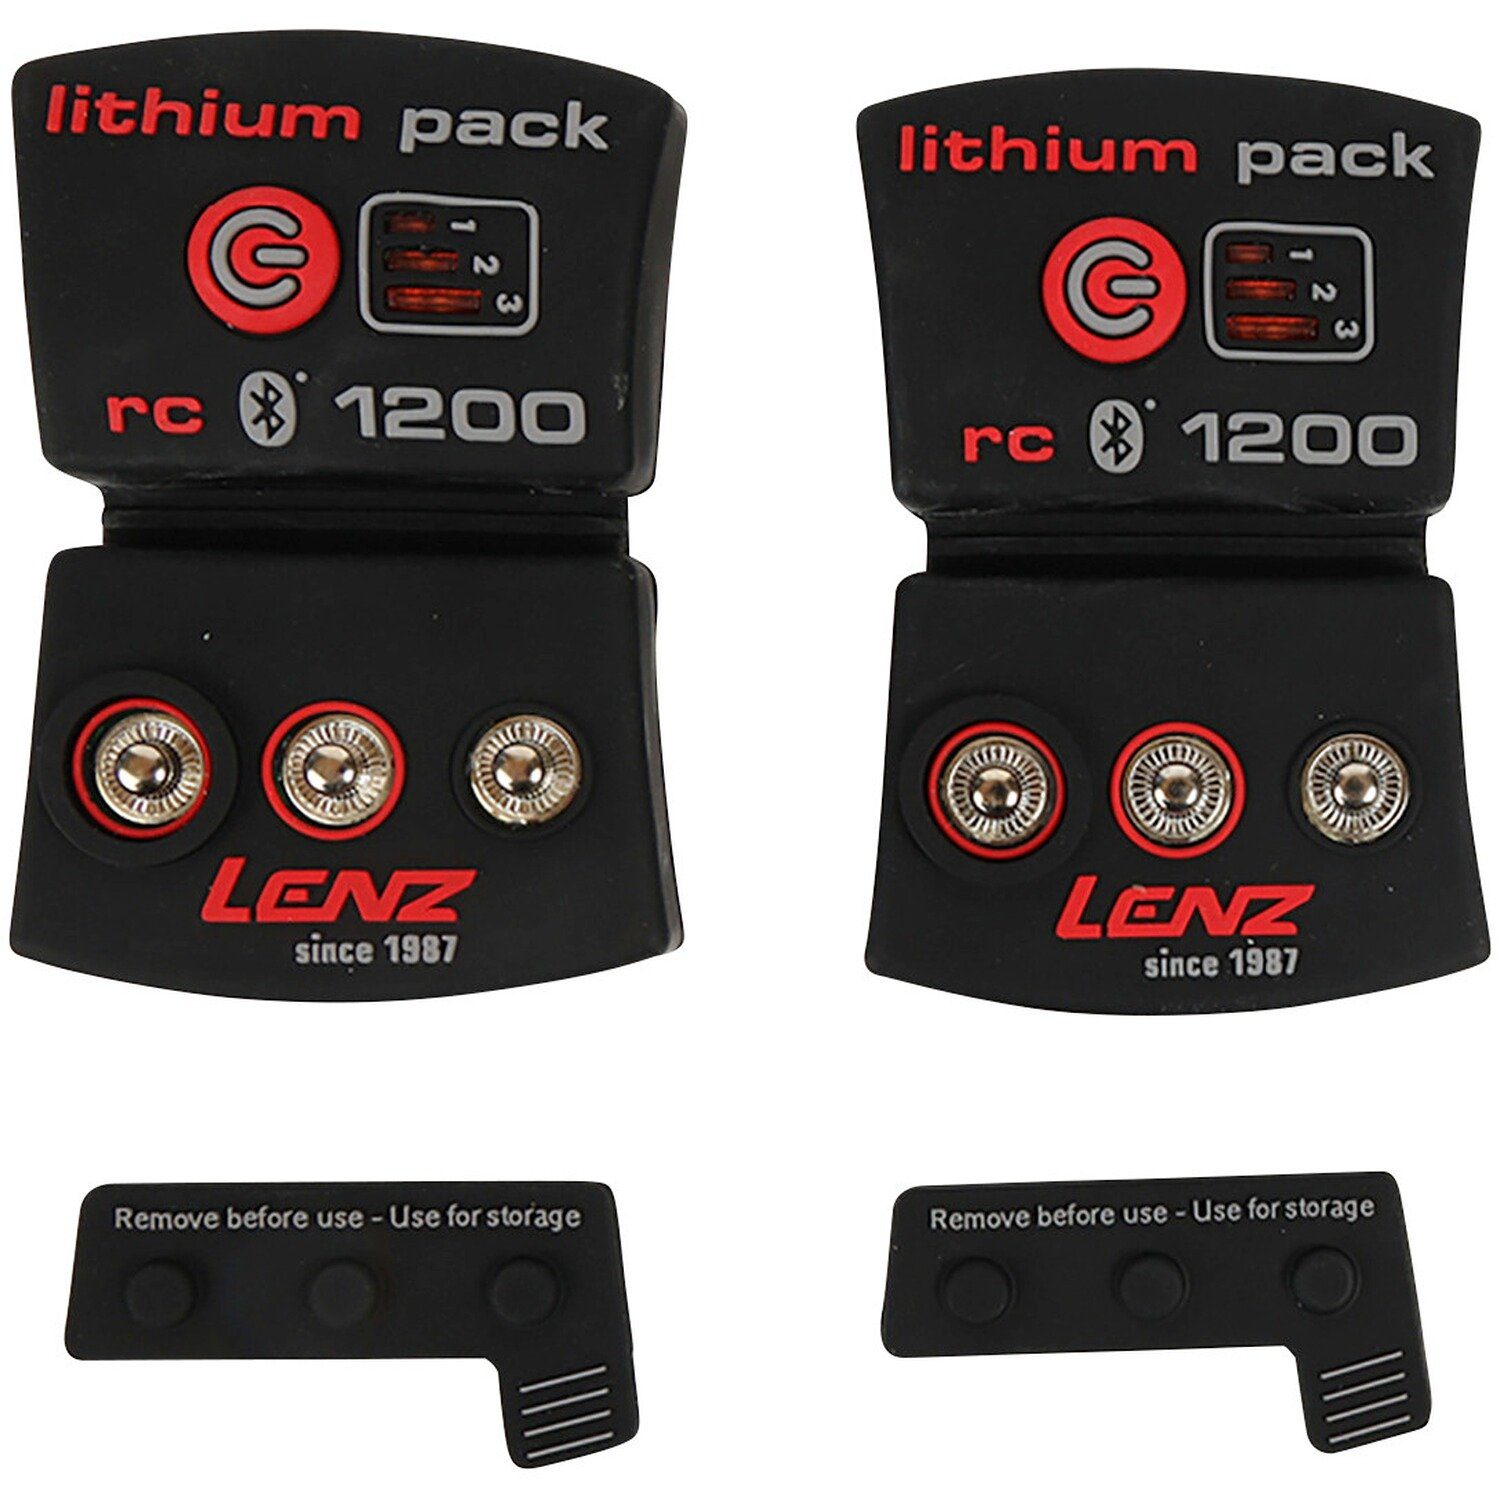 Lenz Products Lithium Pack rcB 1200, 2er-Set Akku